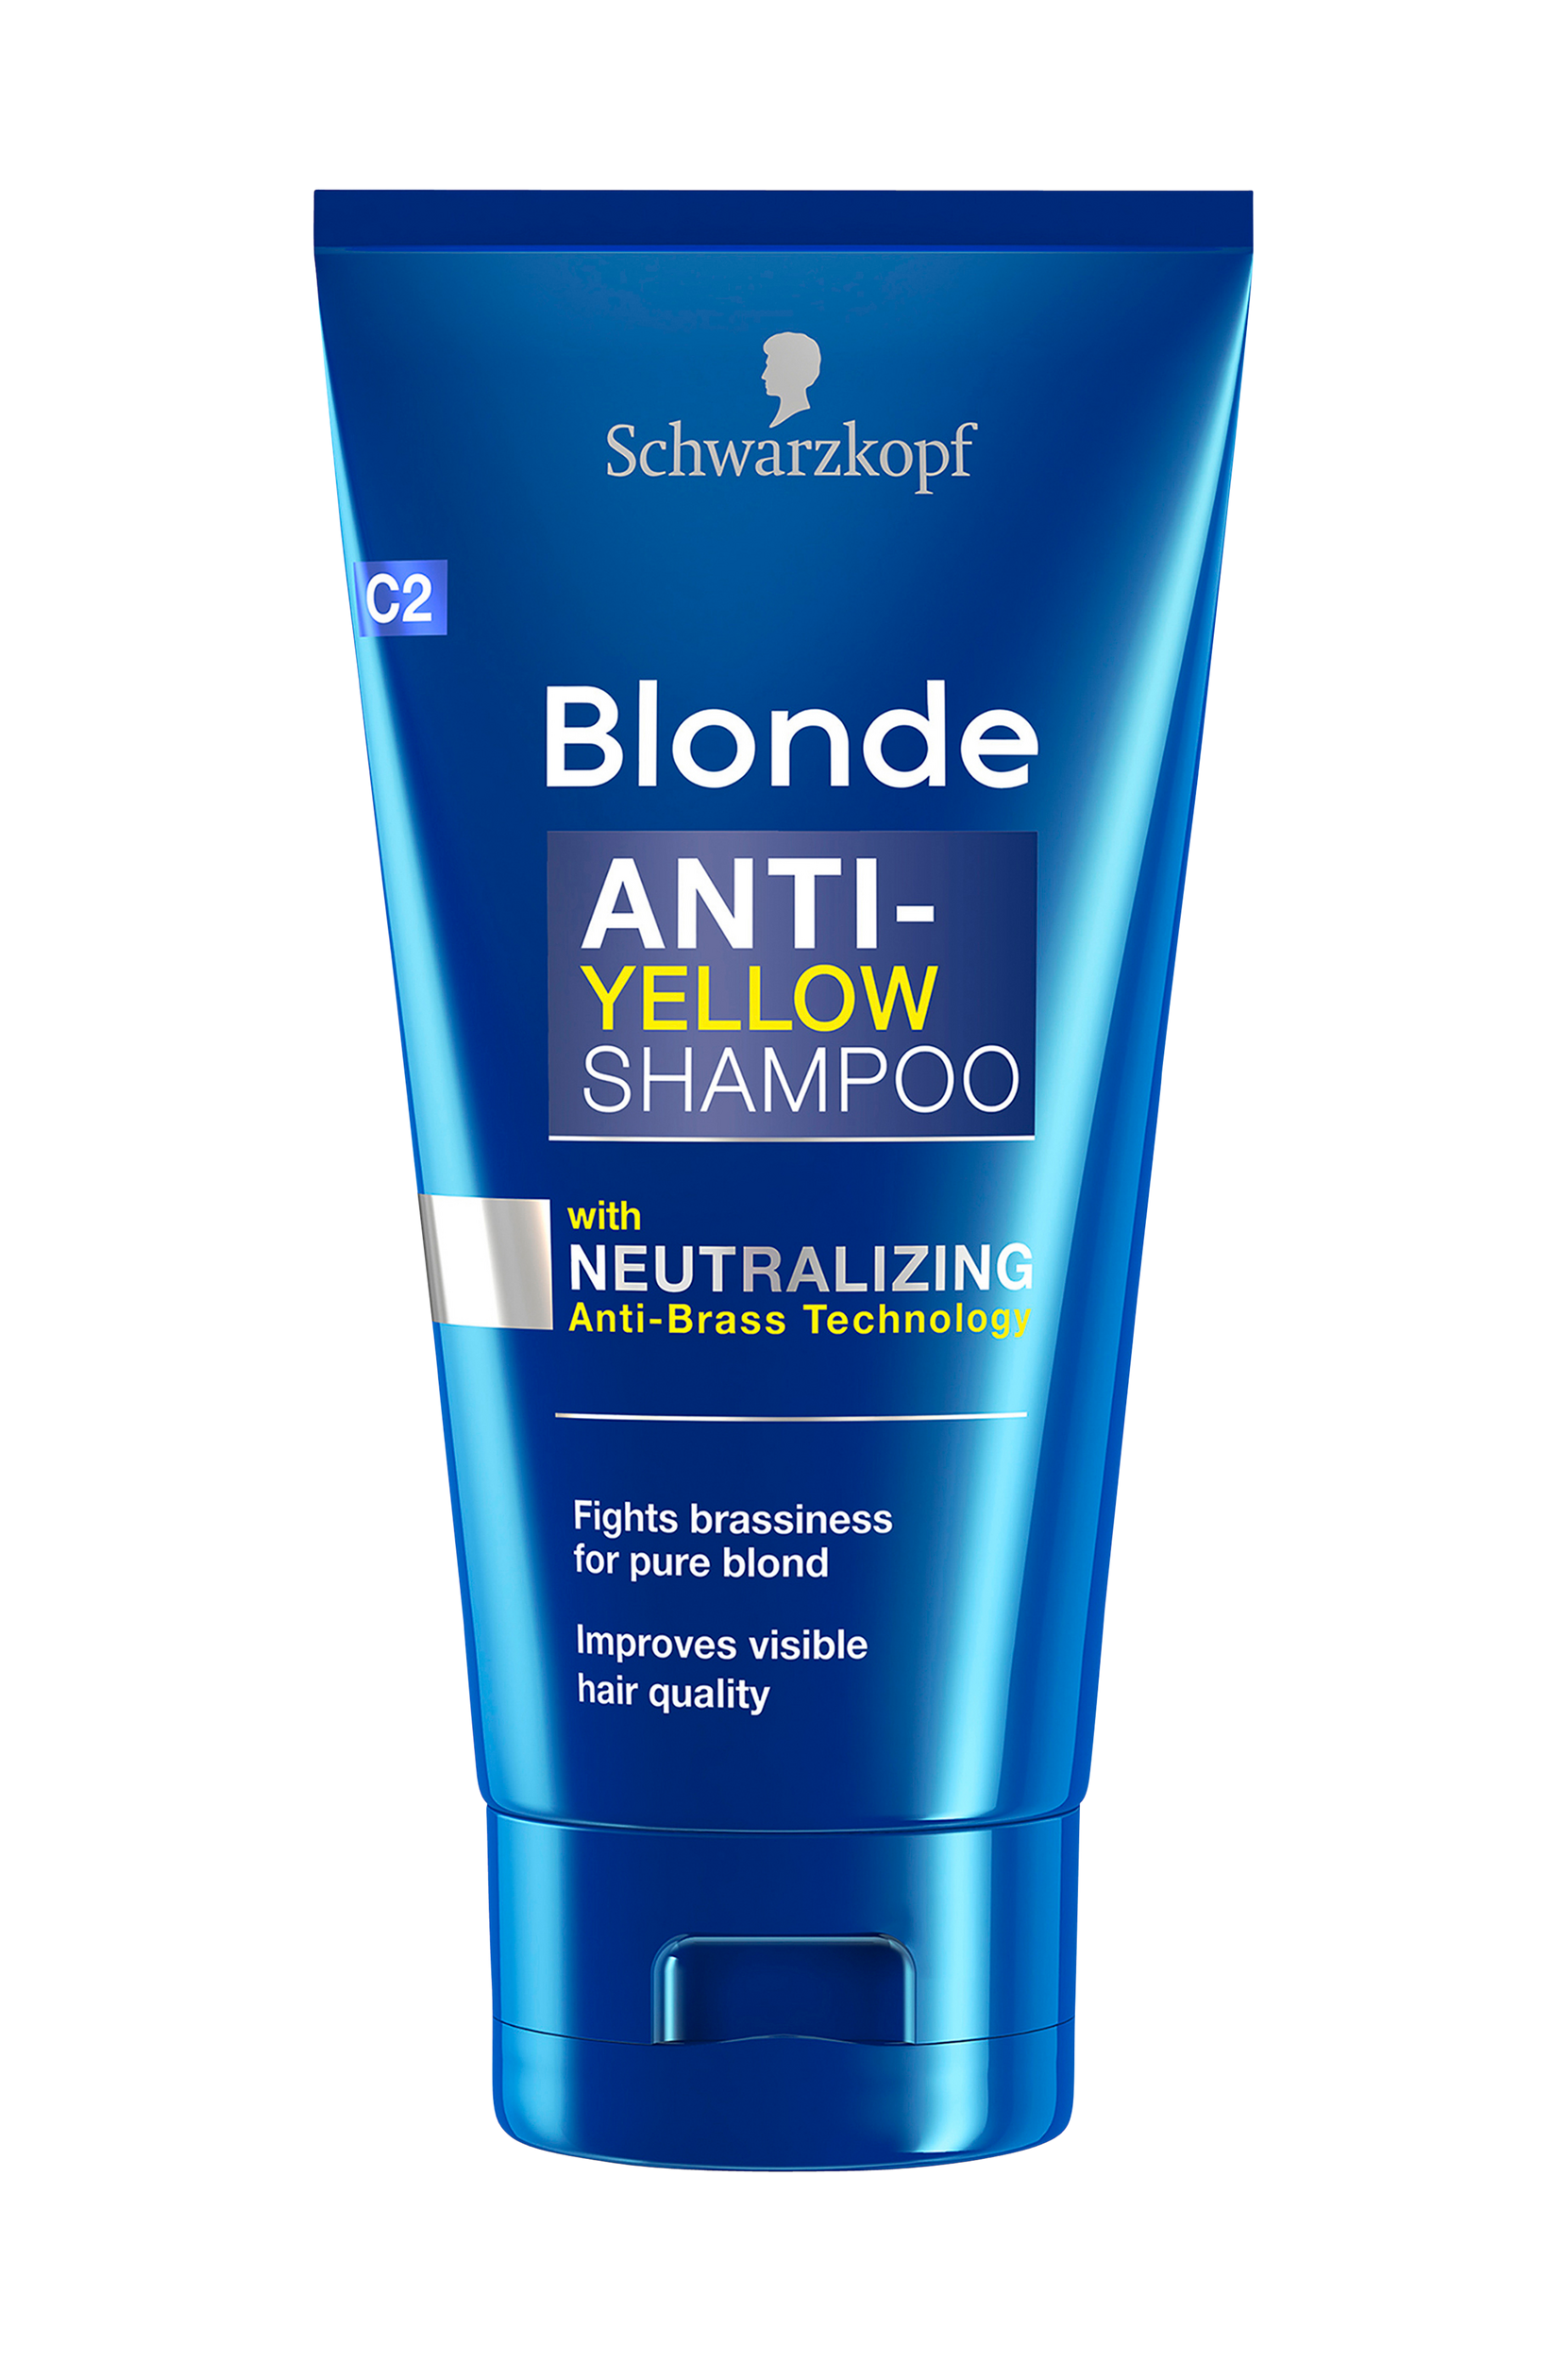 Blonde Anti-Yellow Shampoo, Schwarzkopf